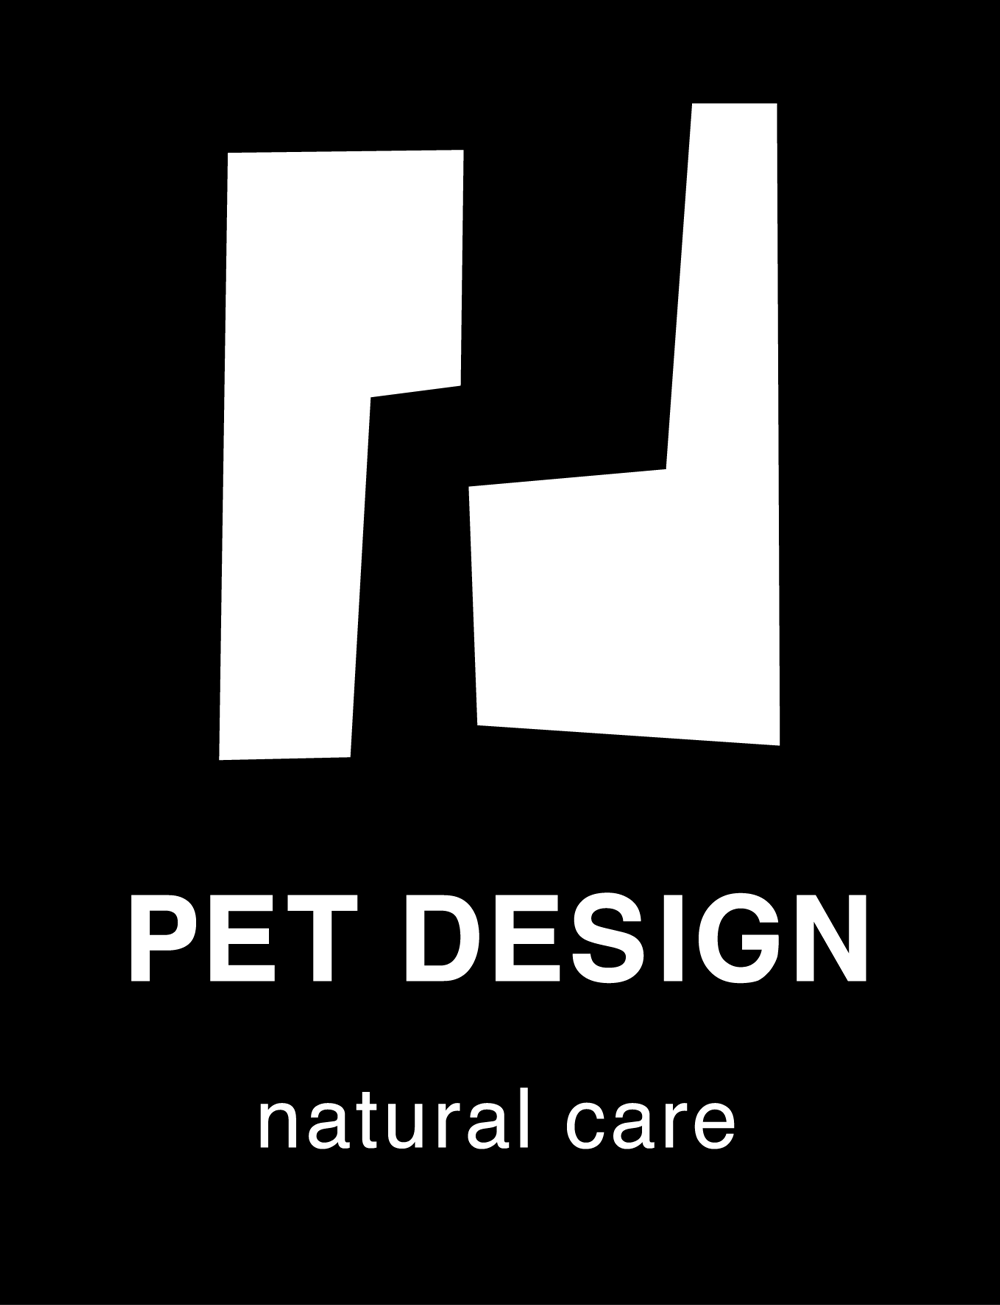 PET DESIGN natural care